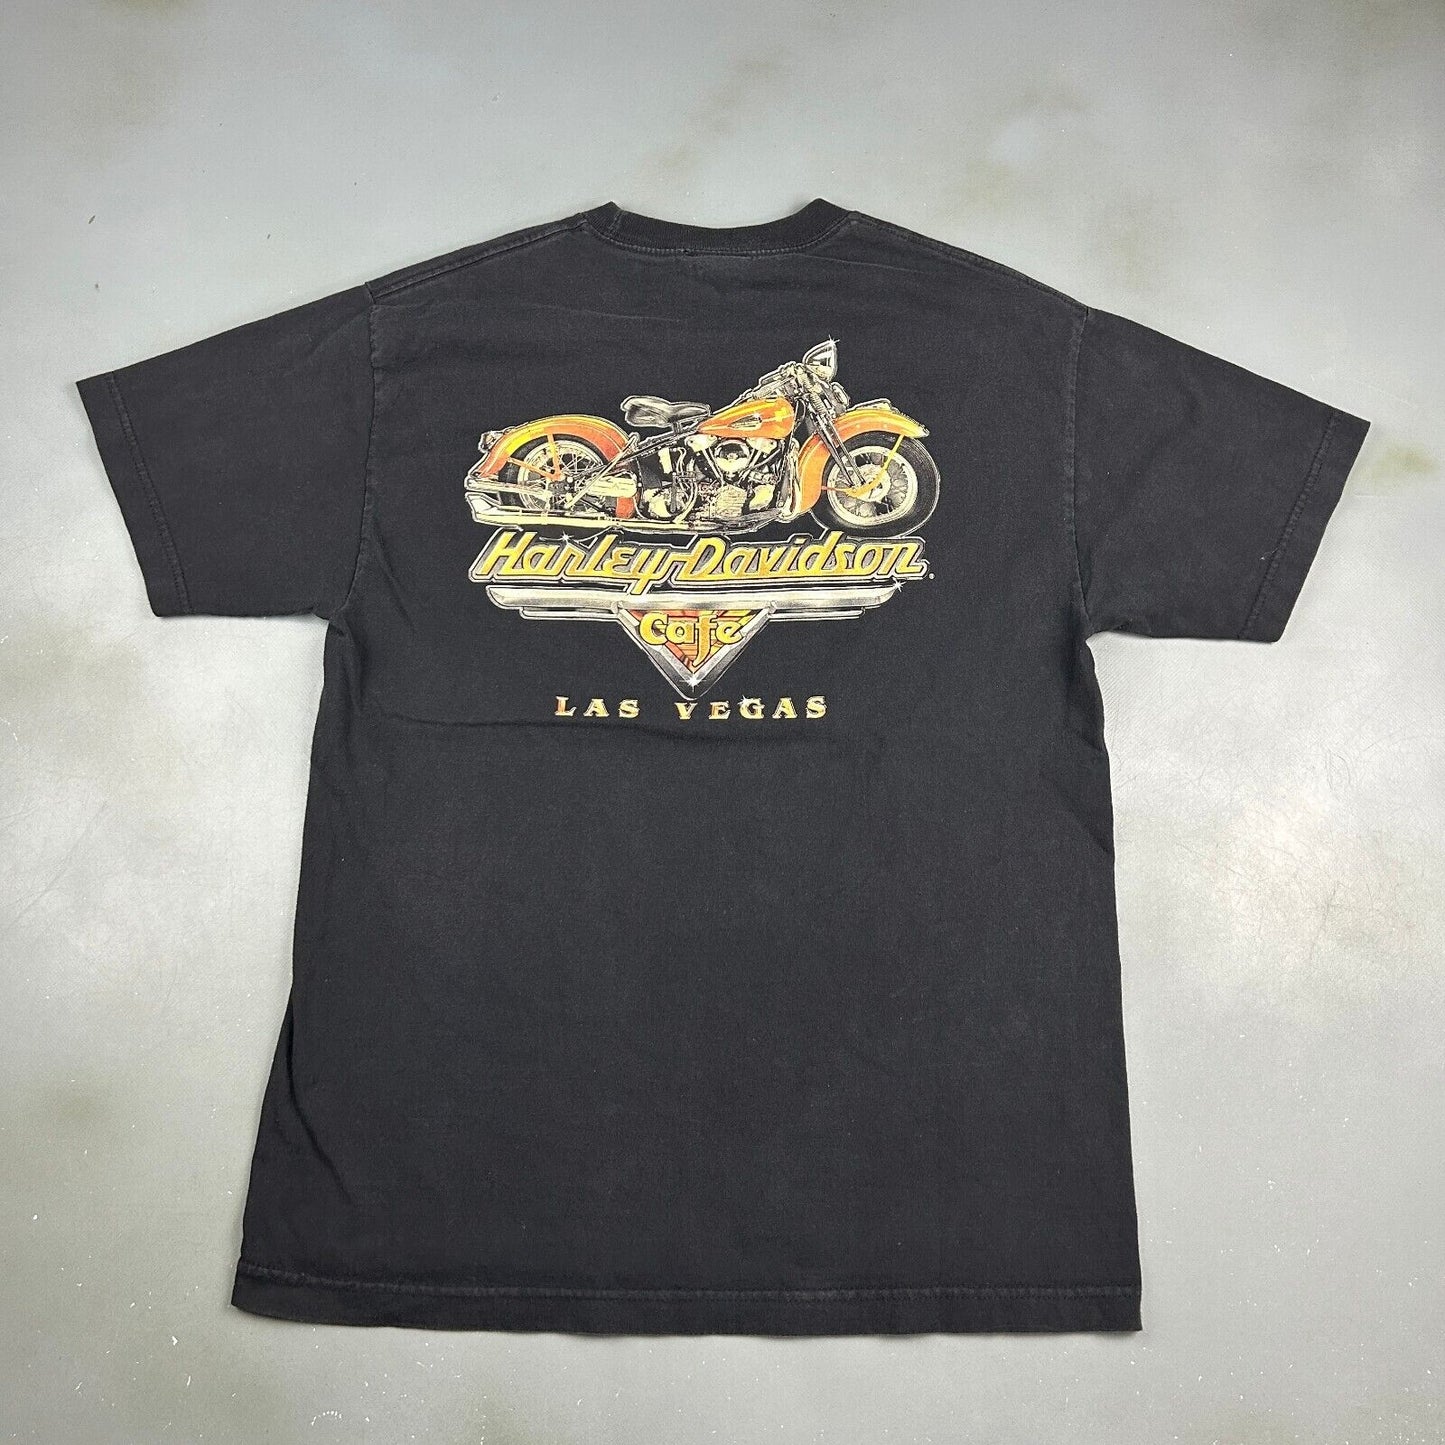 VINTAGE Harley Davidson Cafe Las Vegas Black Biker T-Shirt sz Medium Adult